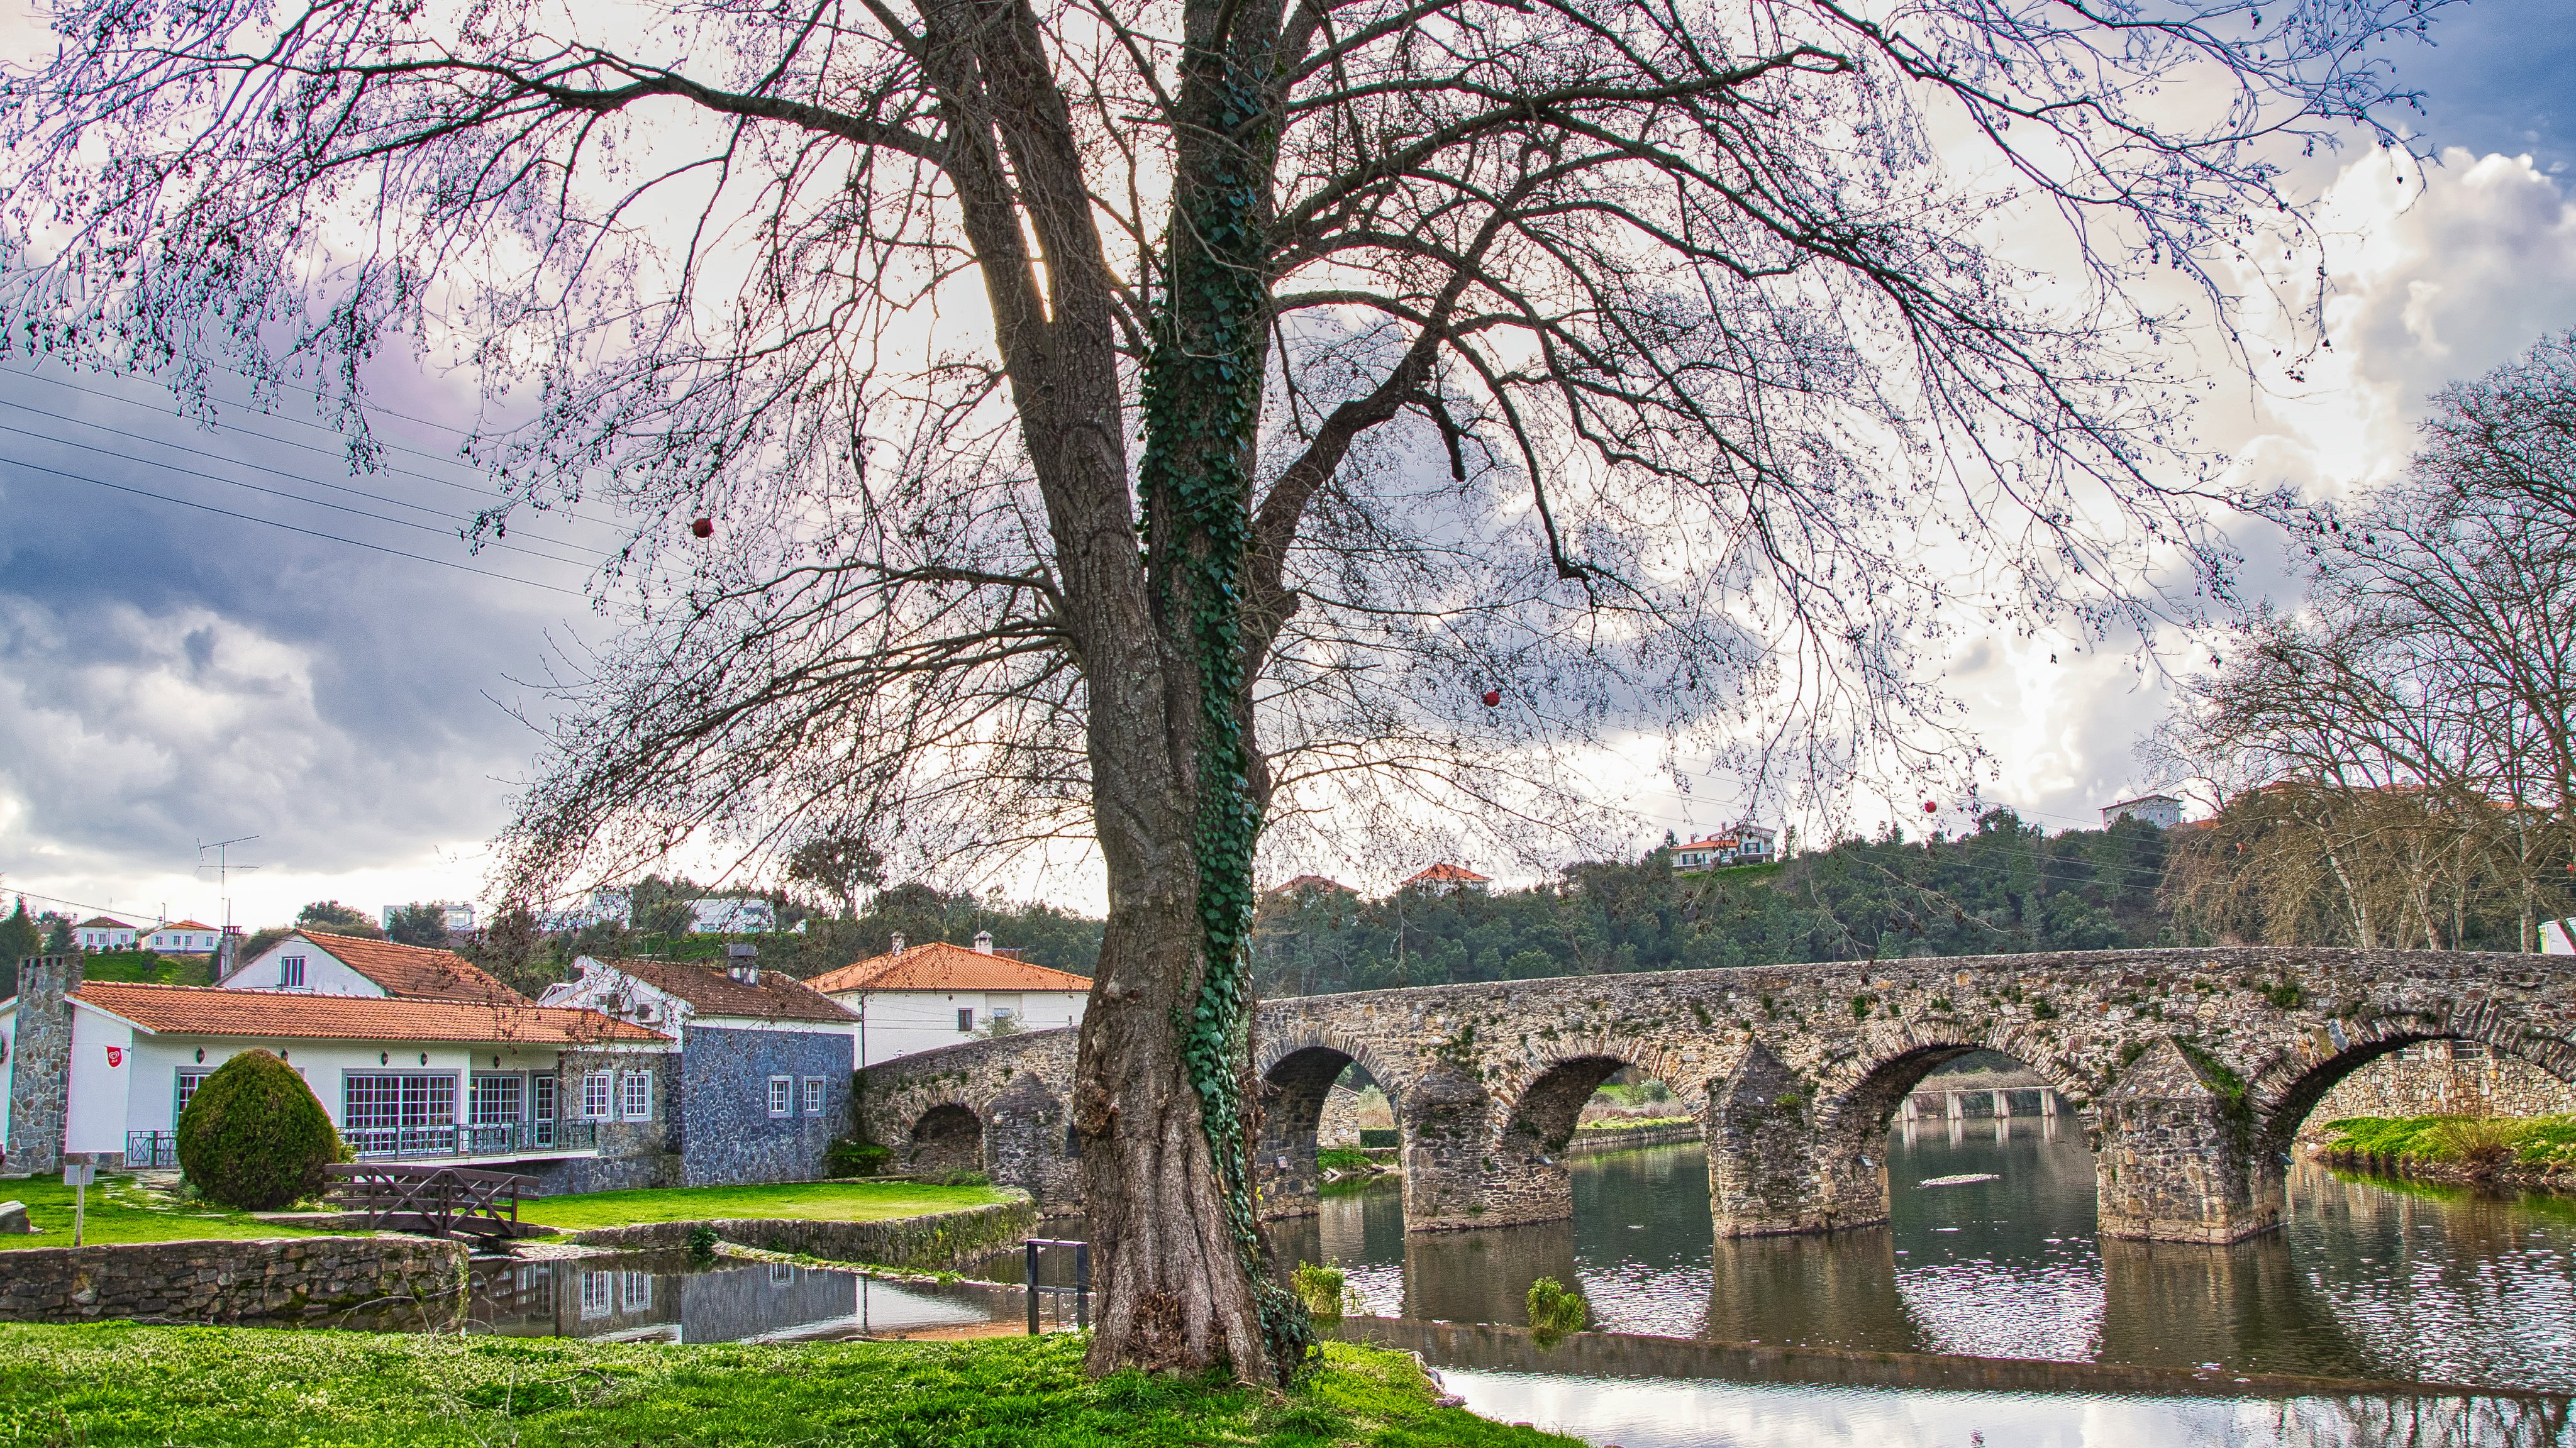 Sertã - Ponte romana